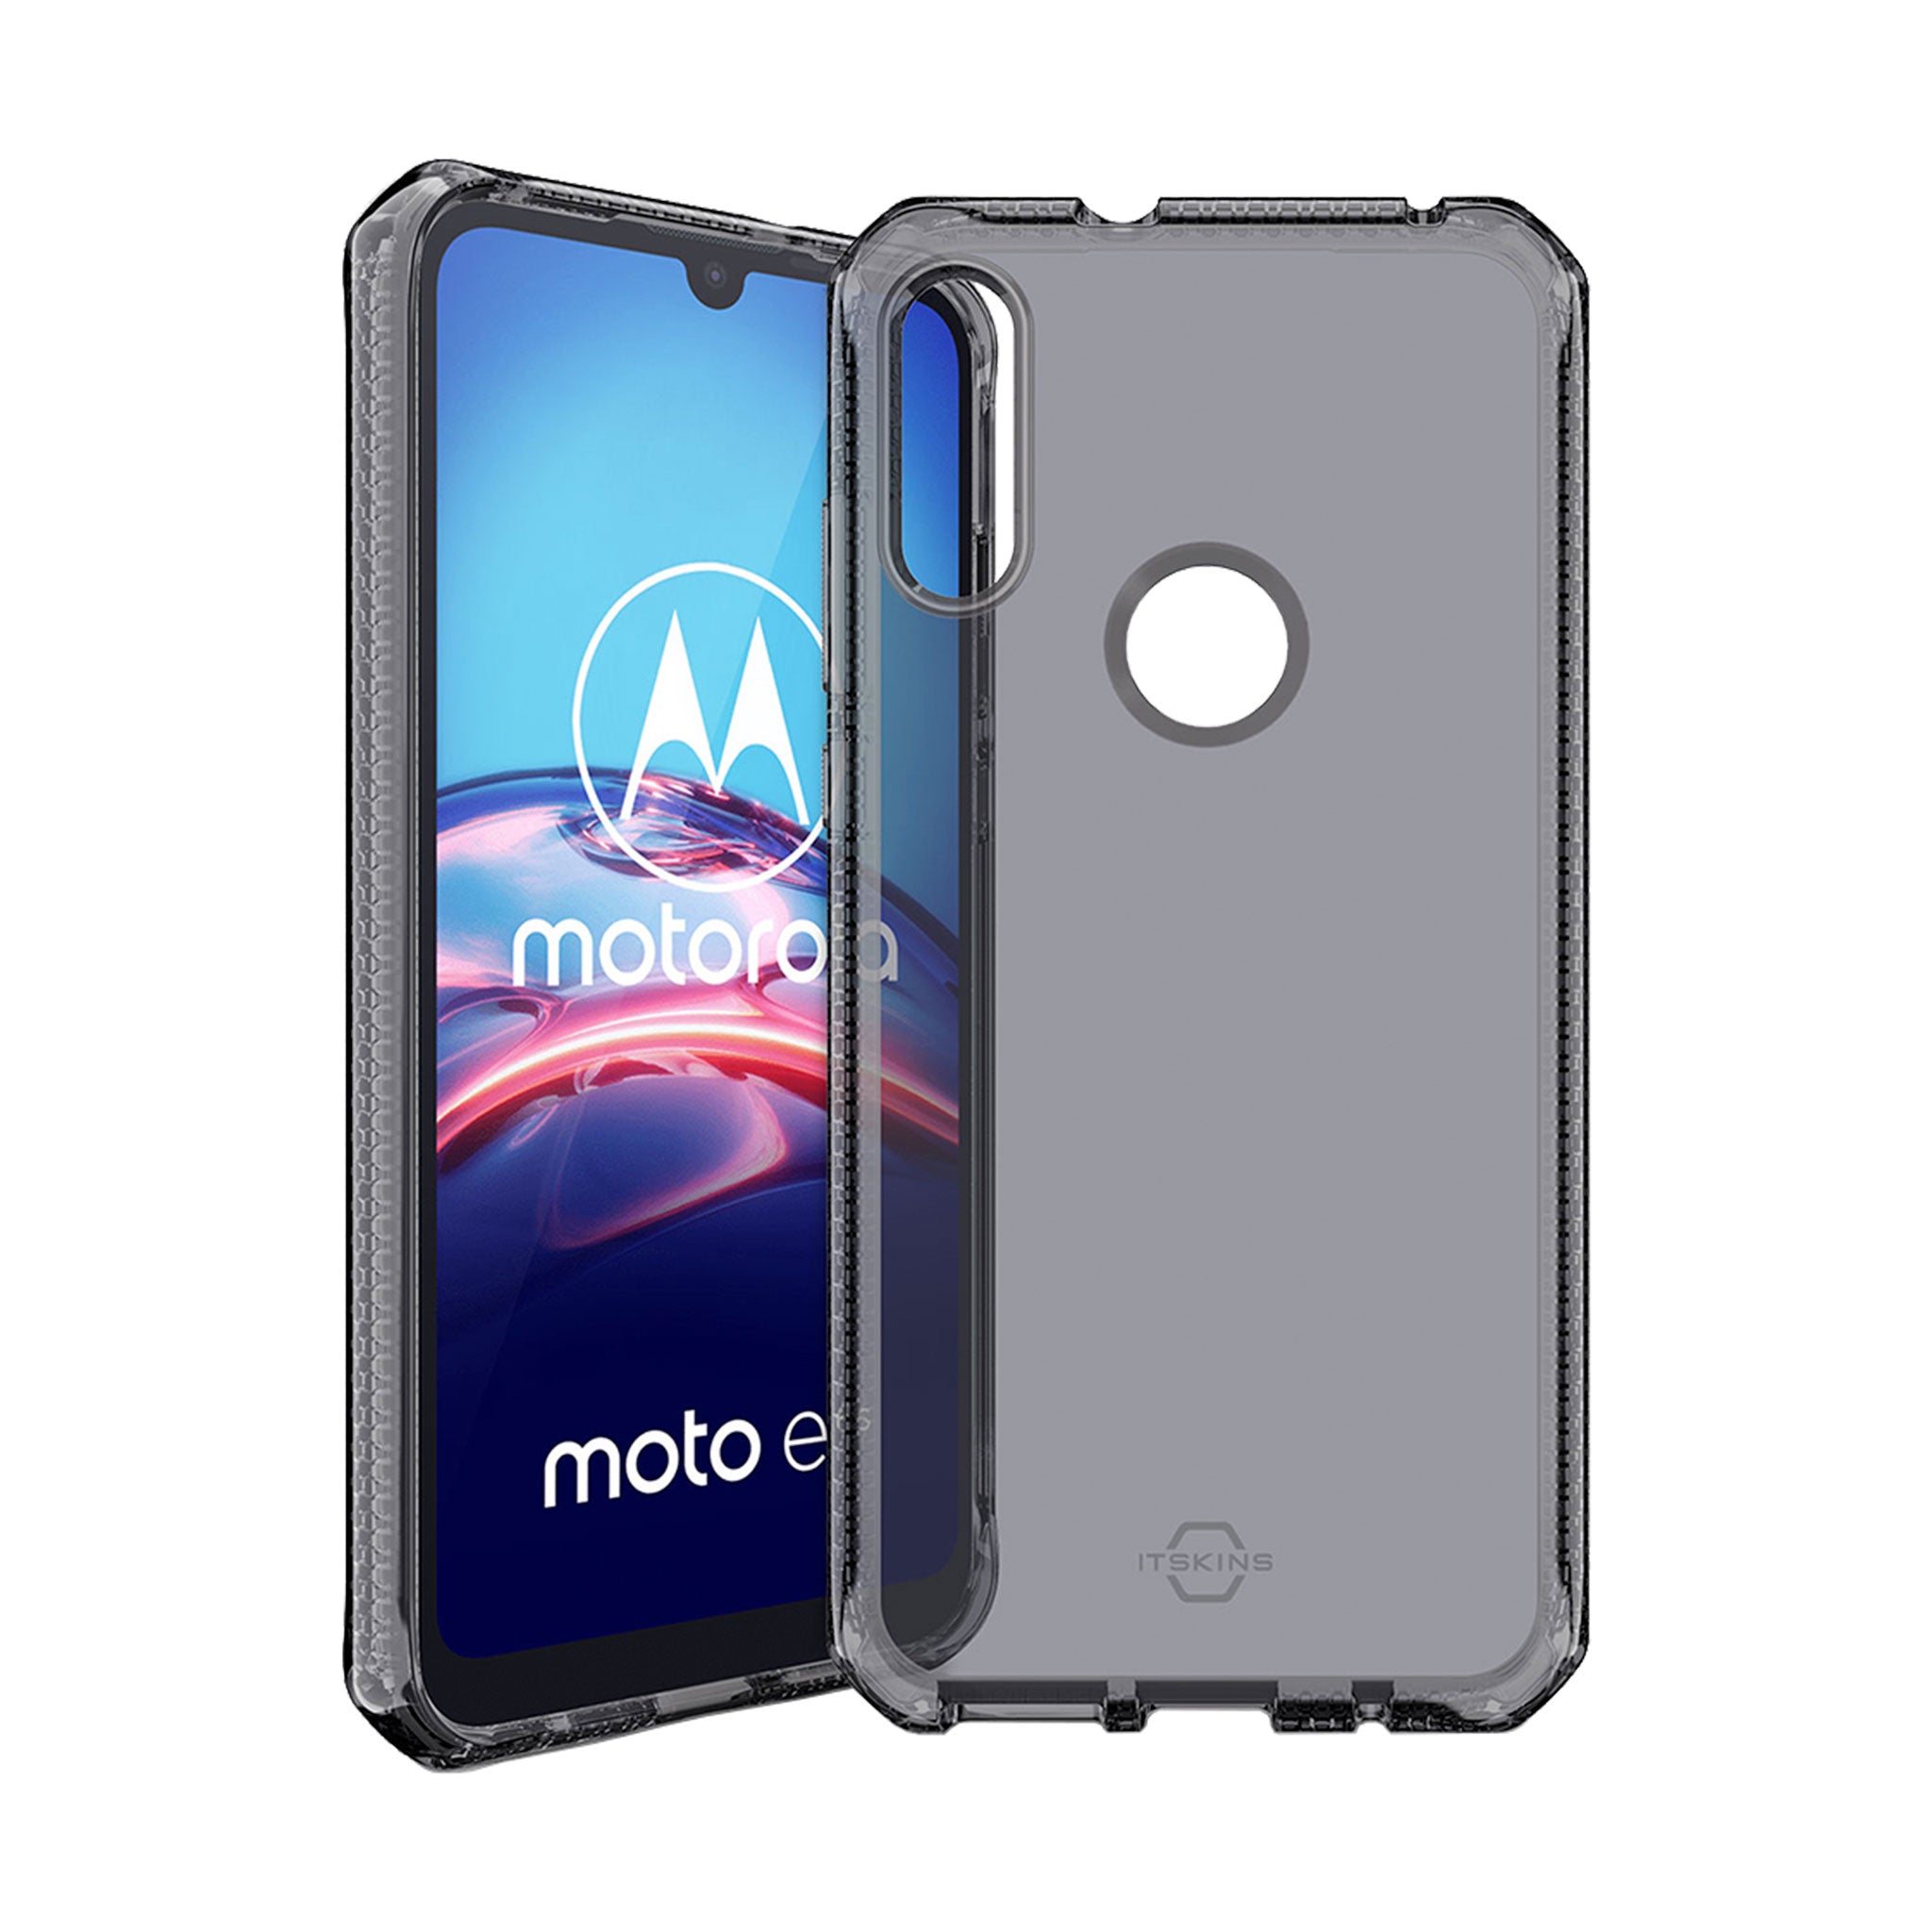 Itskins - Spectrum Clear Case For Motorola Moto E - Smoke